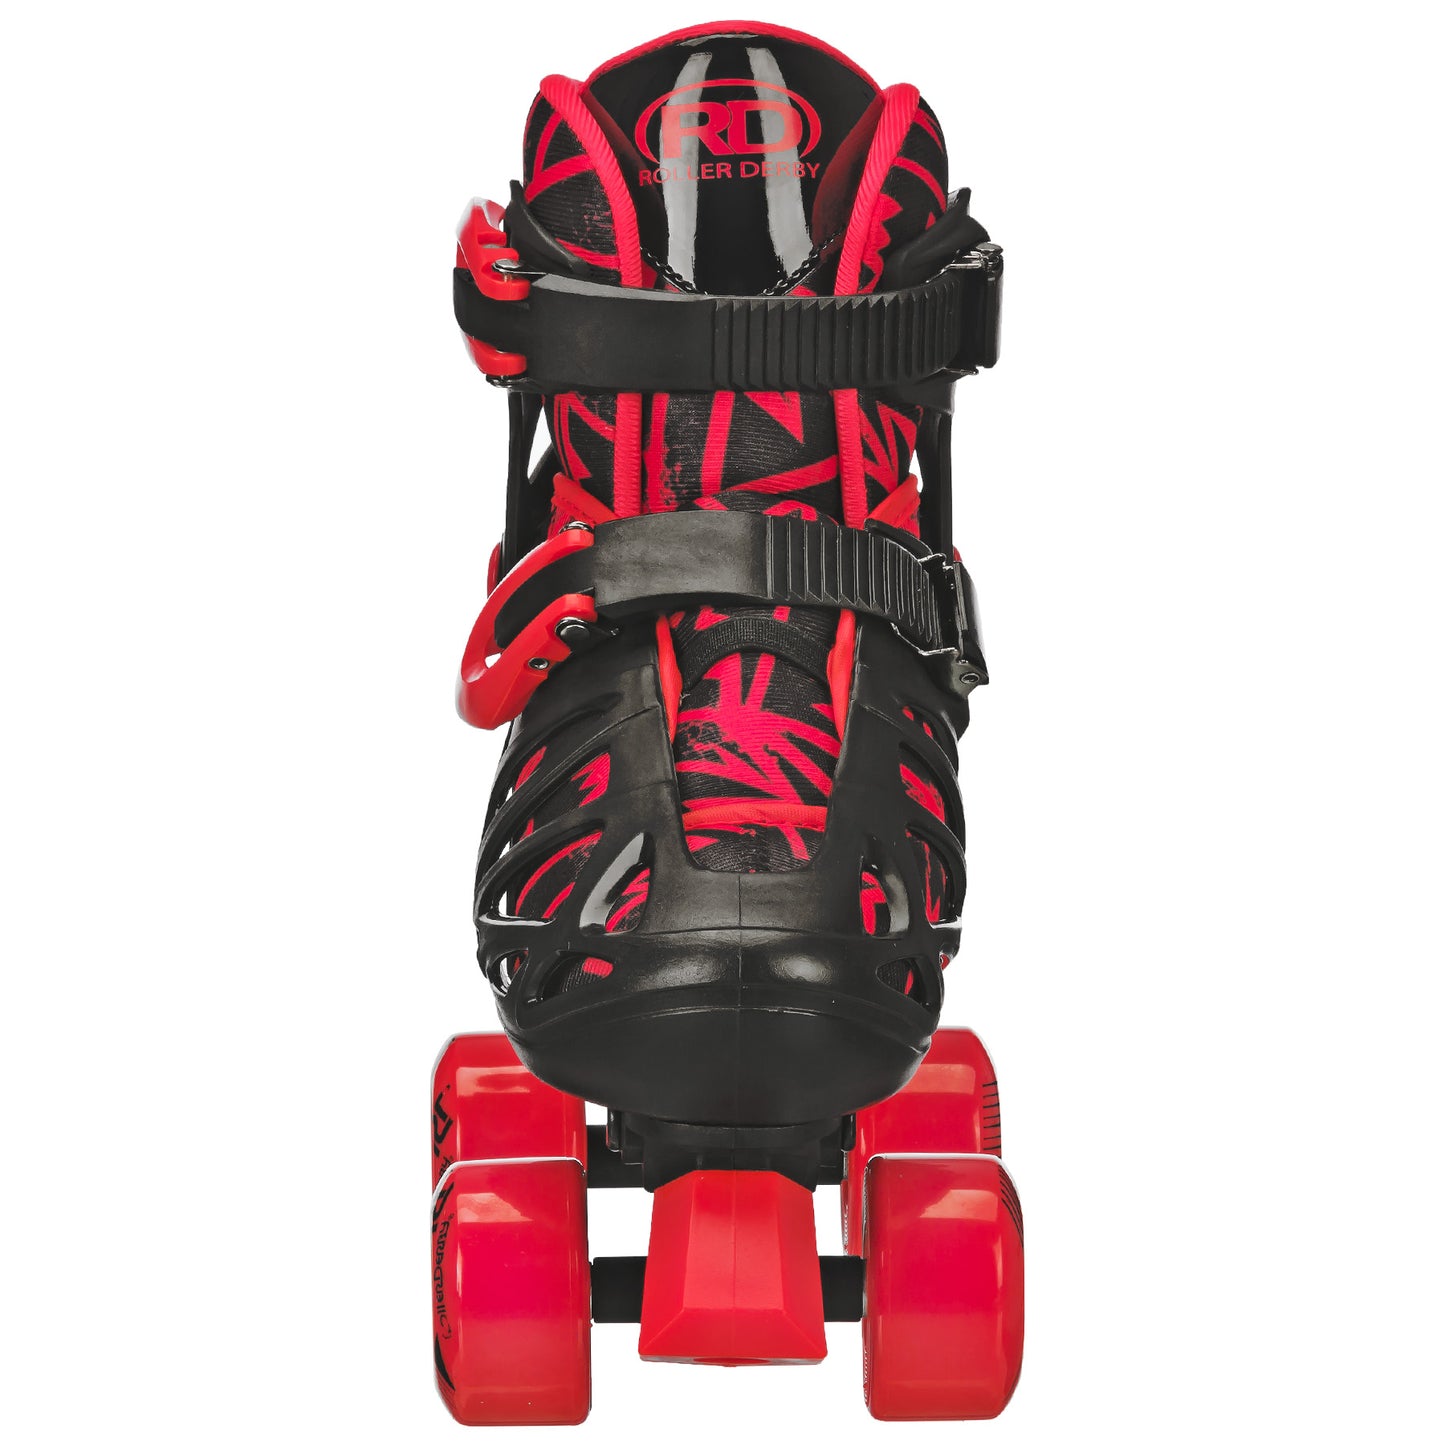 Trac Star Youth Boy's Adjustable Roller Skates